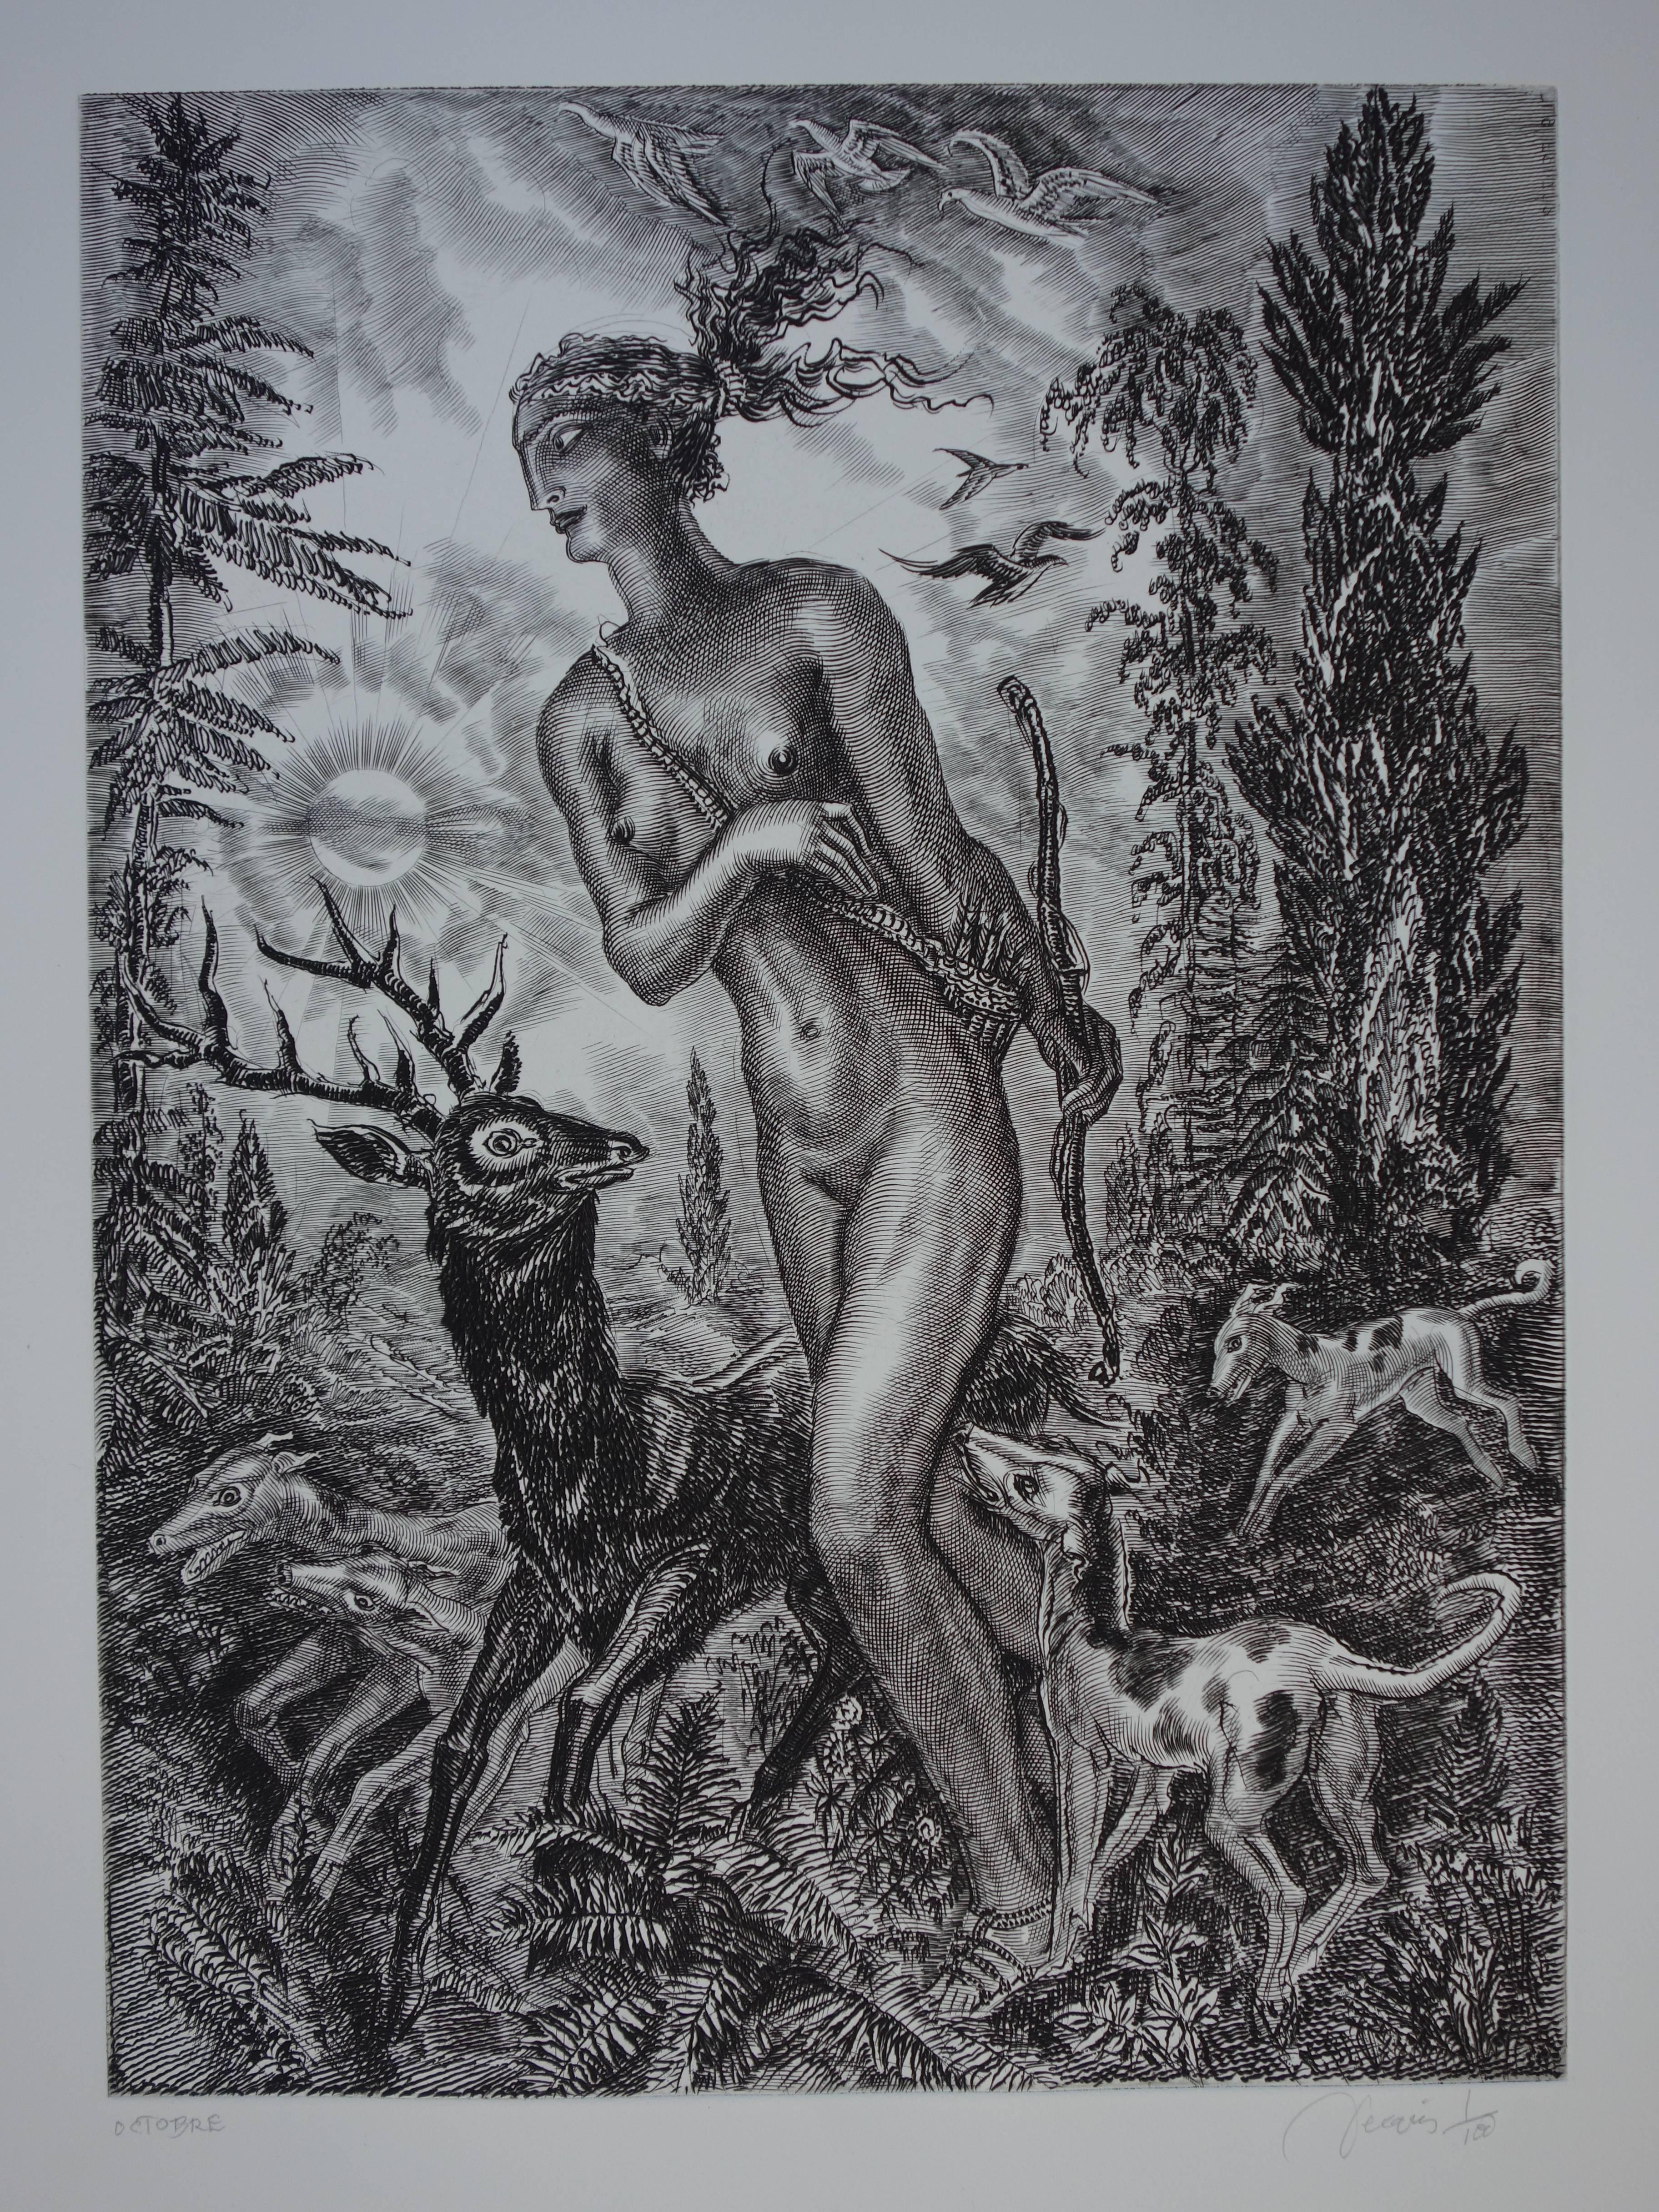 Albert Decaris Figurative Print - October : Diane the Huntress - Original handsigned etching - Exceptional n°1/100